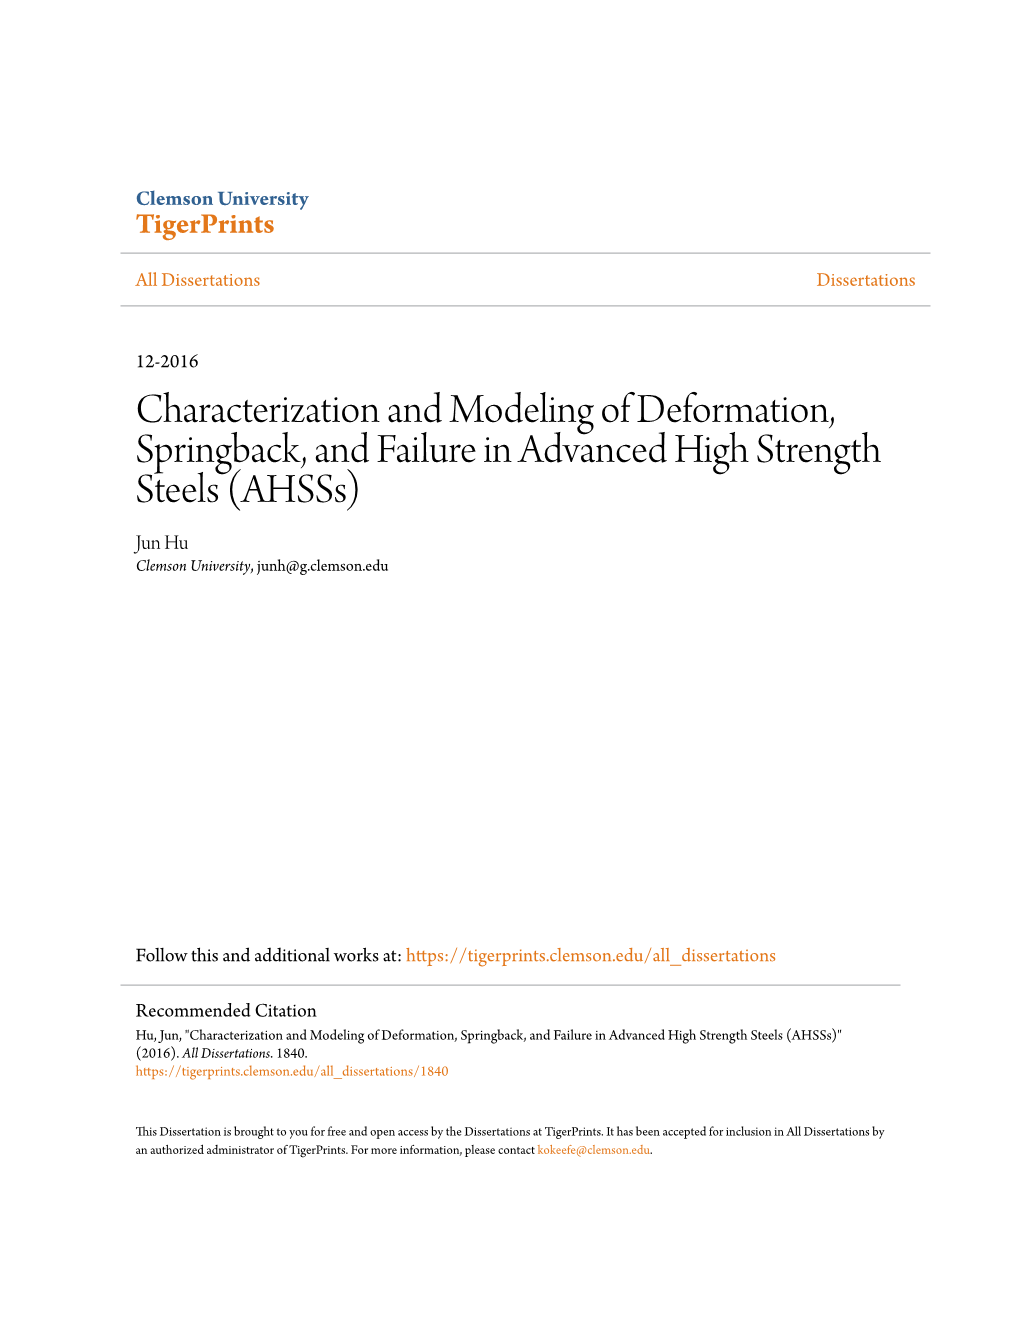 Characterization and Modeling of Deformation, Springback, and Failure in Advanced High Strength Steels (Ahsss) Jun Hu Clemson University, Junh@G.Clemson.Edu